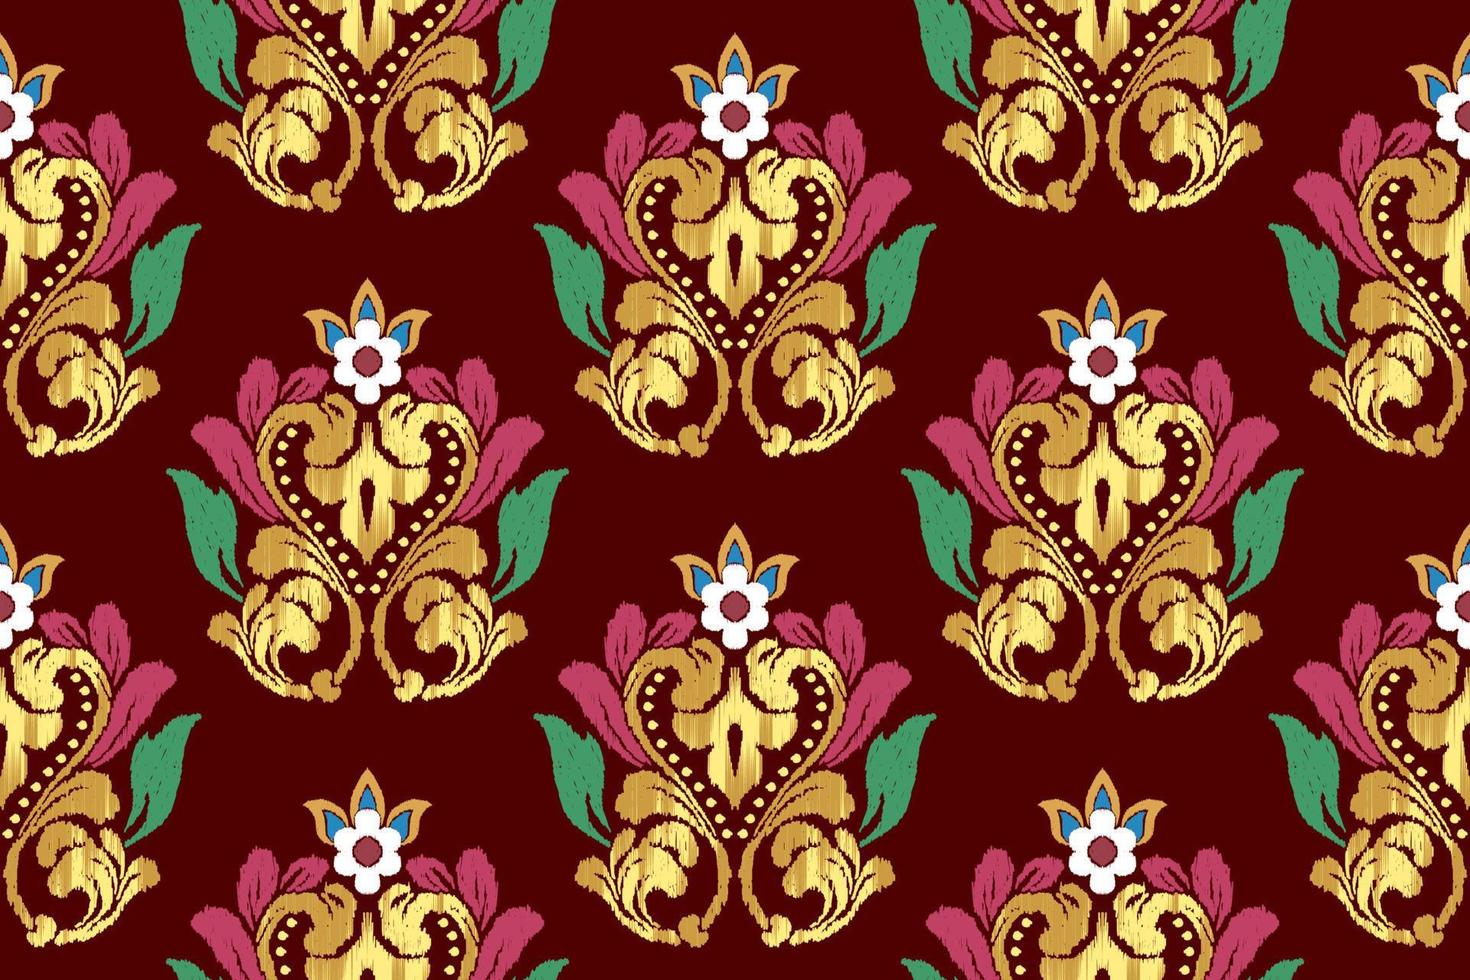 Ikat ethnic seamless pattern design. Aztec fabric mandala textile wallpaper. Tribal native motif boho ornament African American Indian folk traditional embroidery vector background